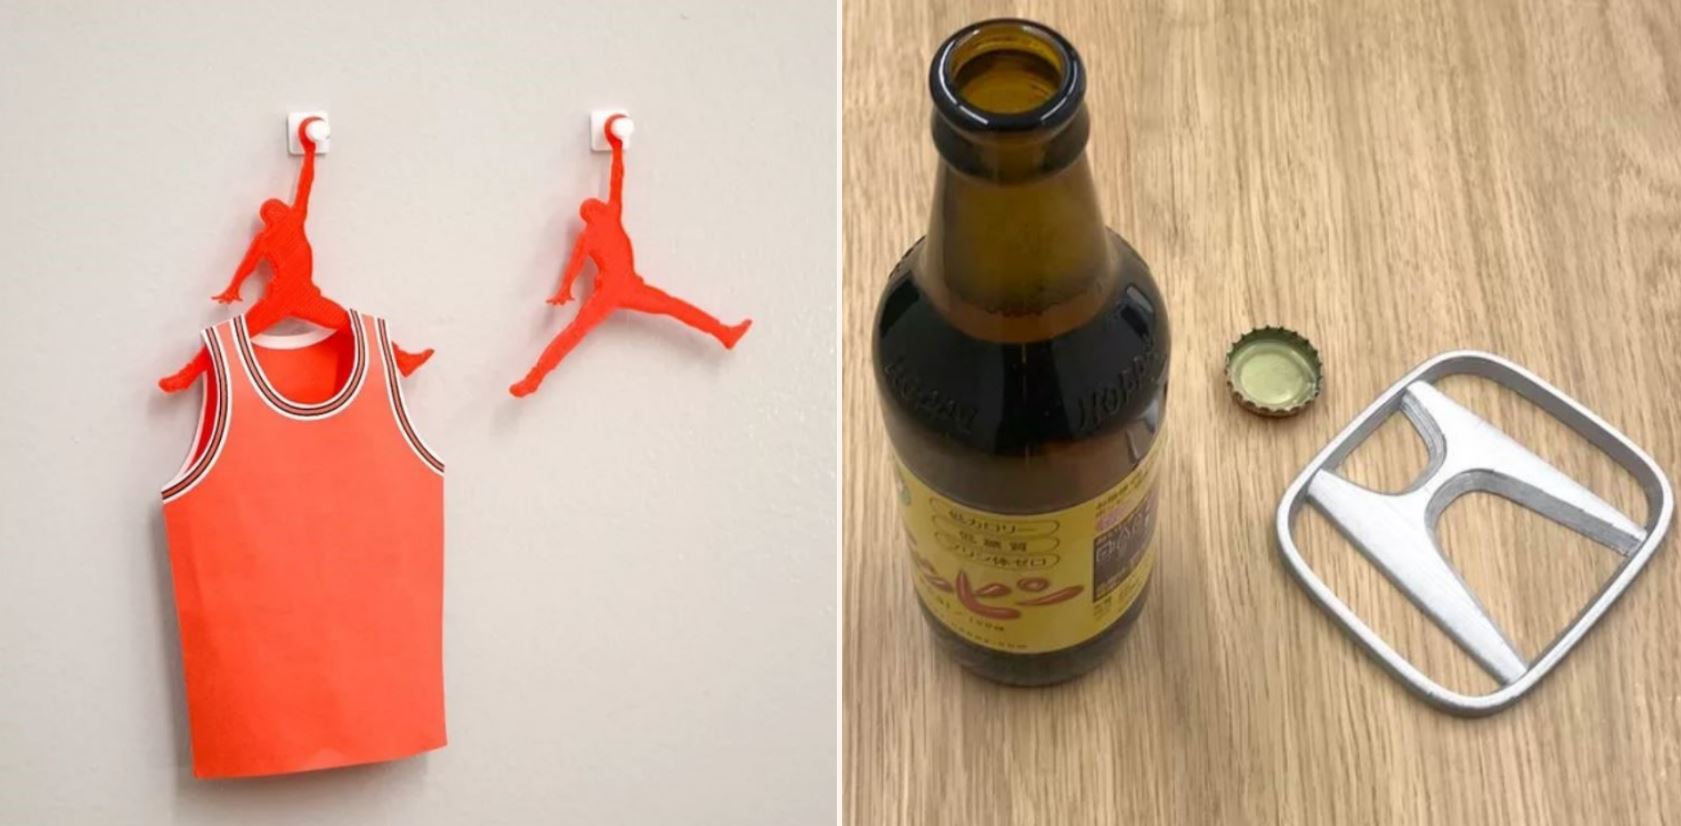 Japanese bloke transforms brand logos into useful items